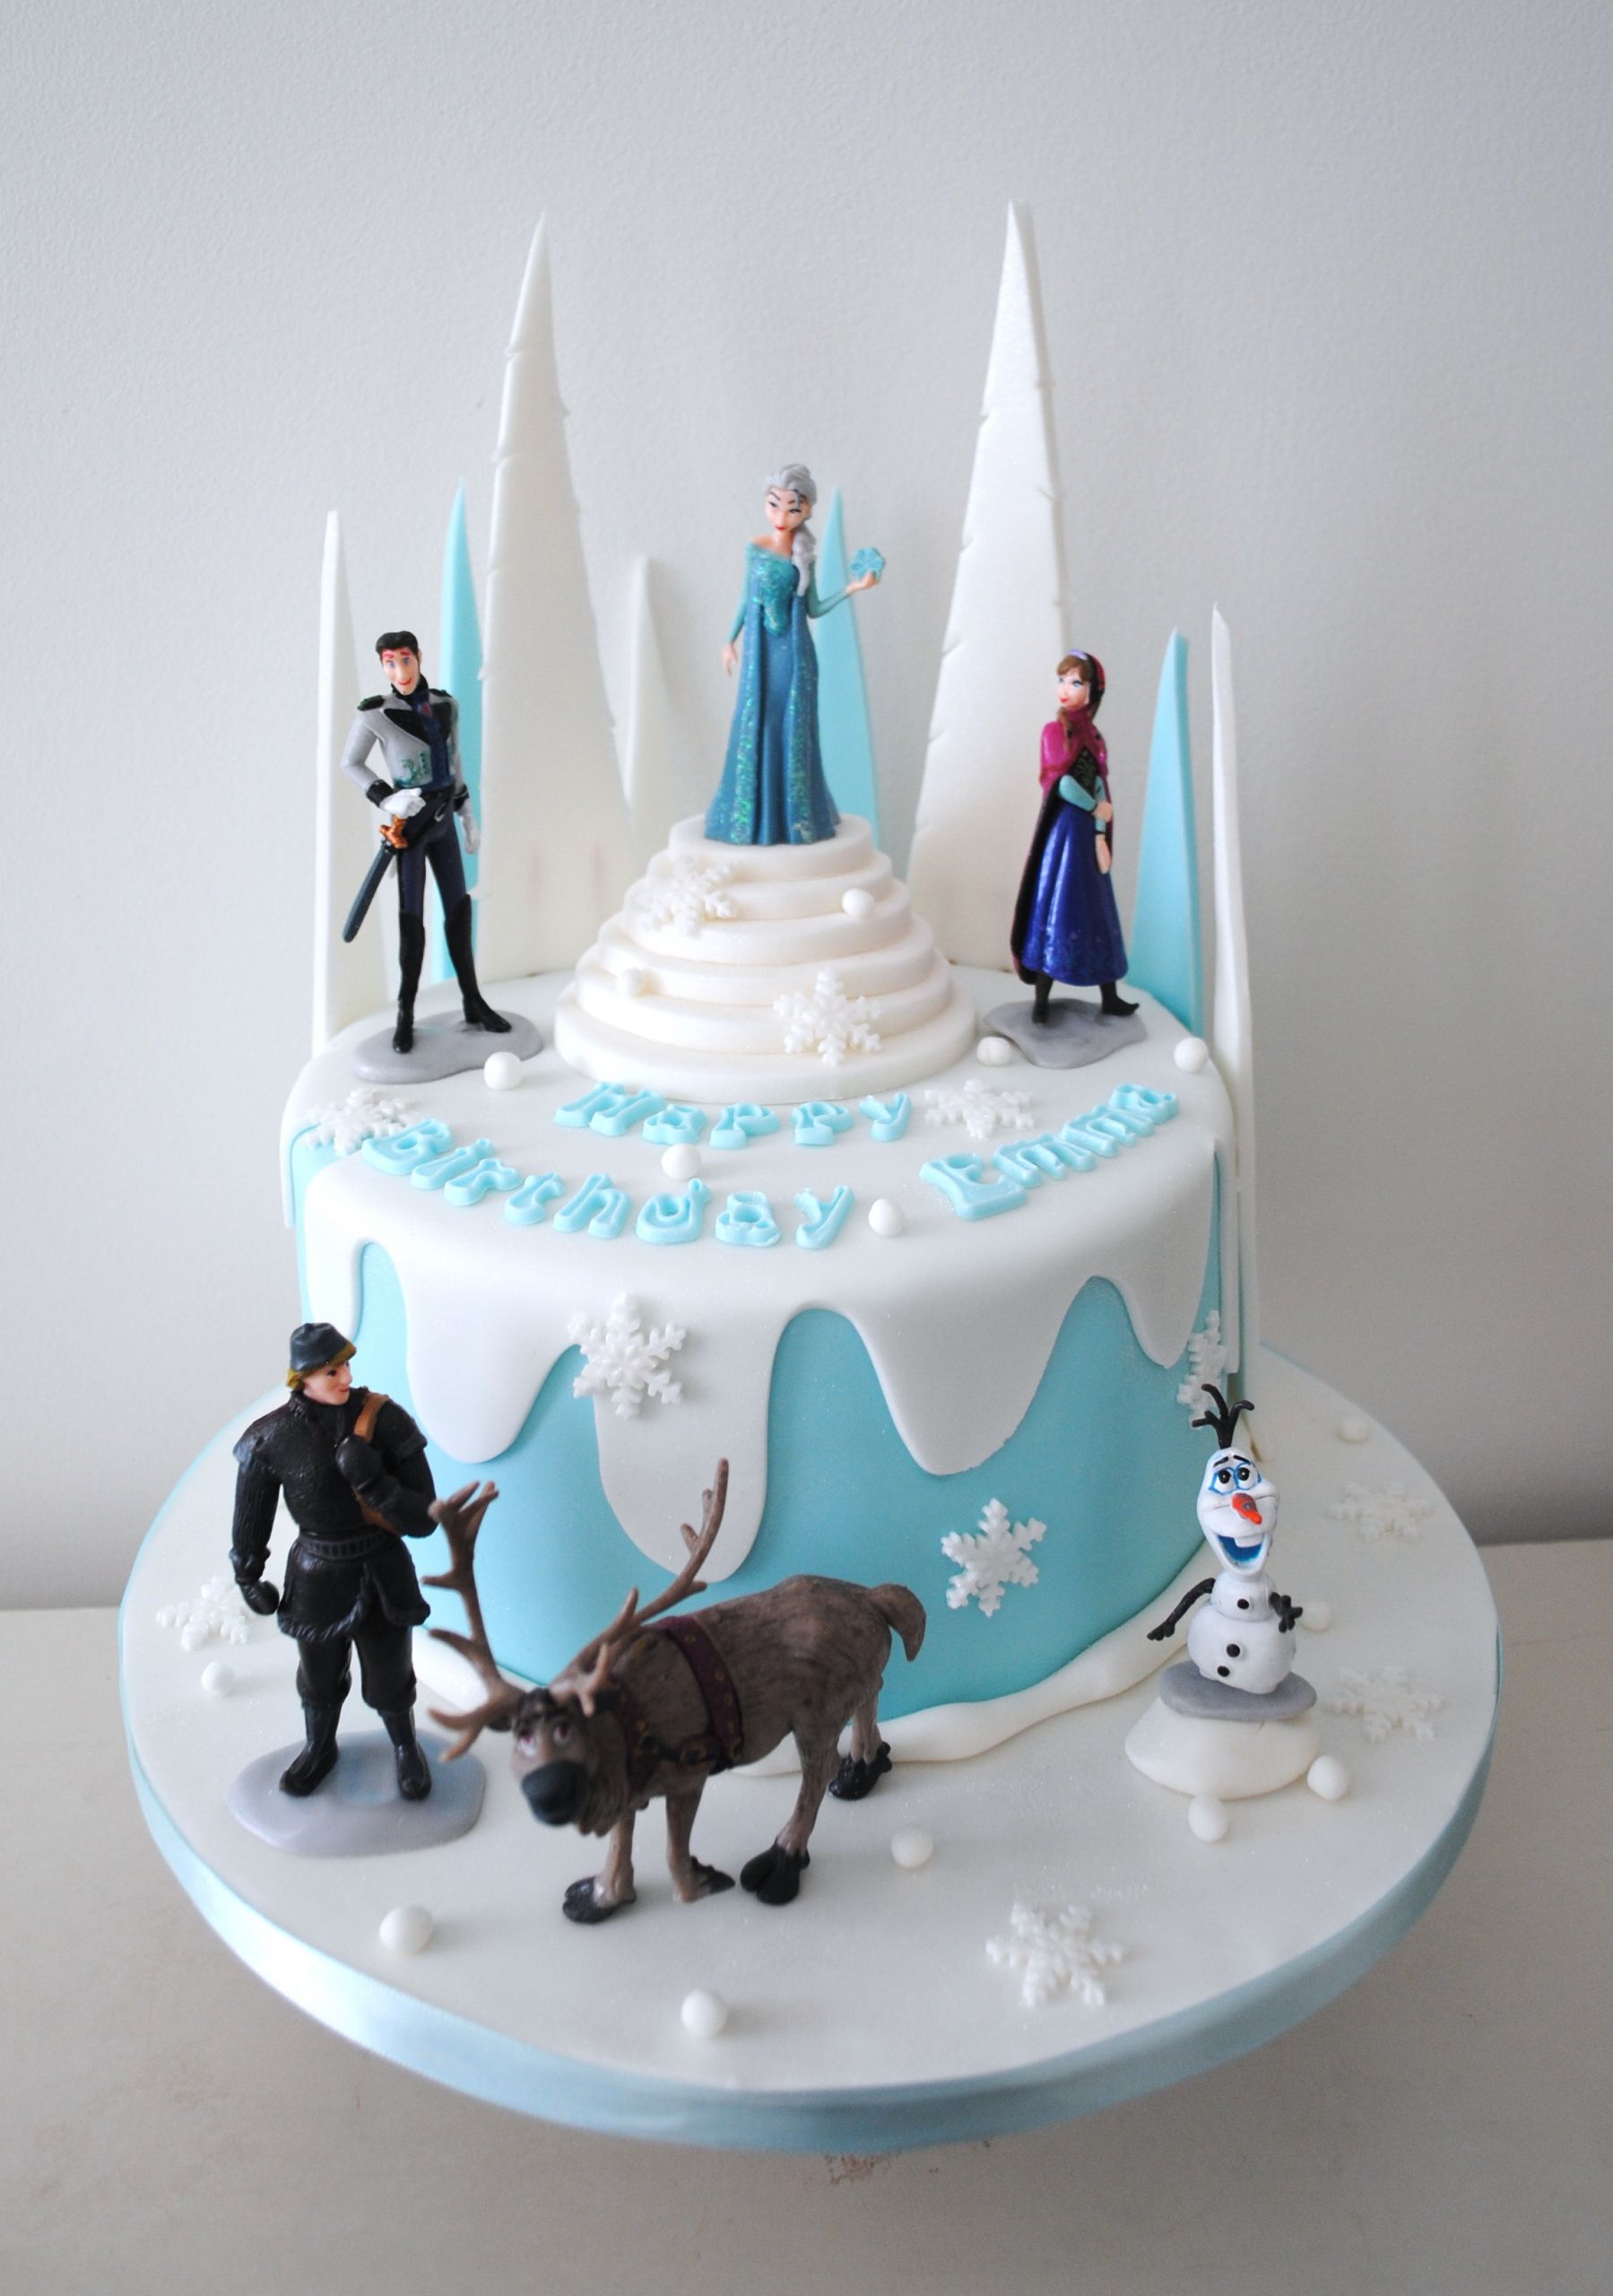 Frozen Birthday Cakes Images
 Frozen 2 Birthday Cakes London Cupcakes